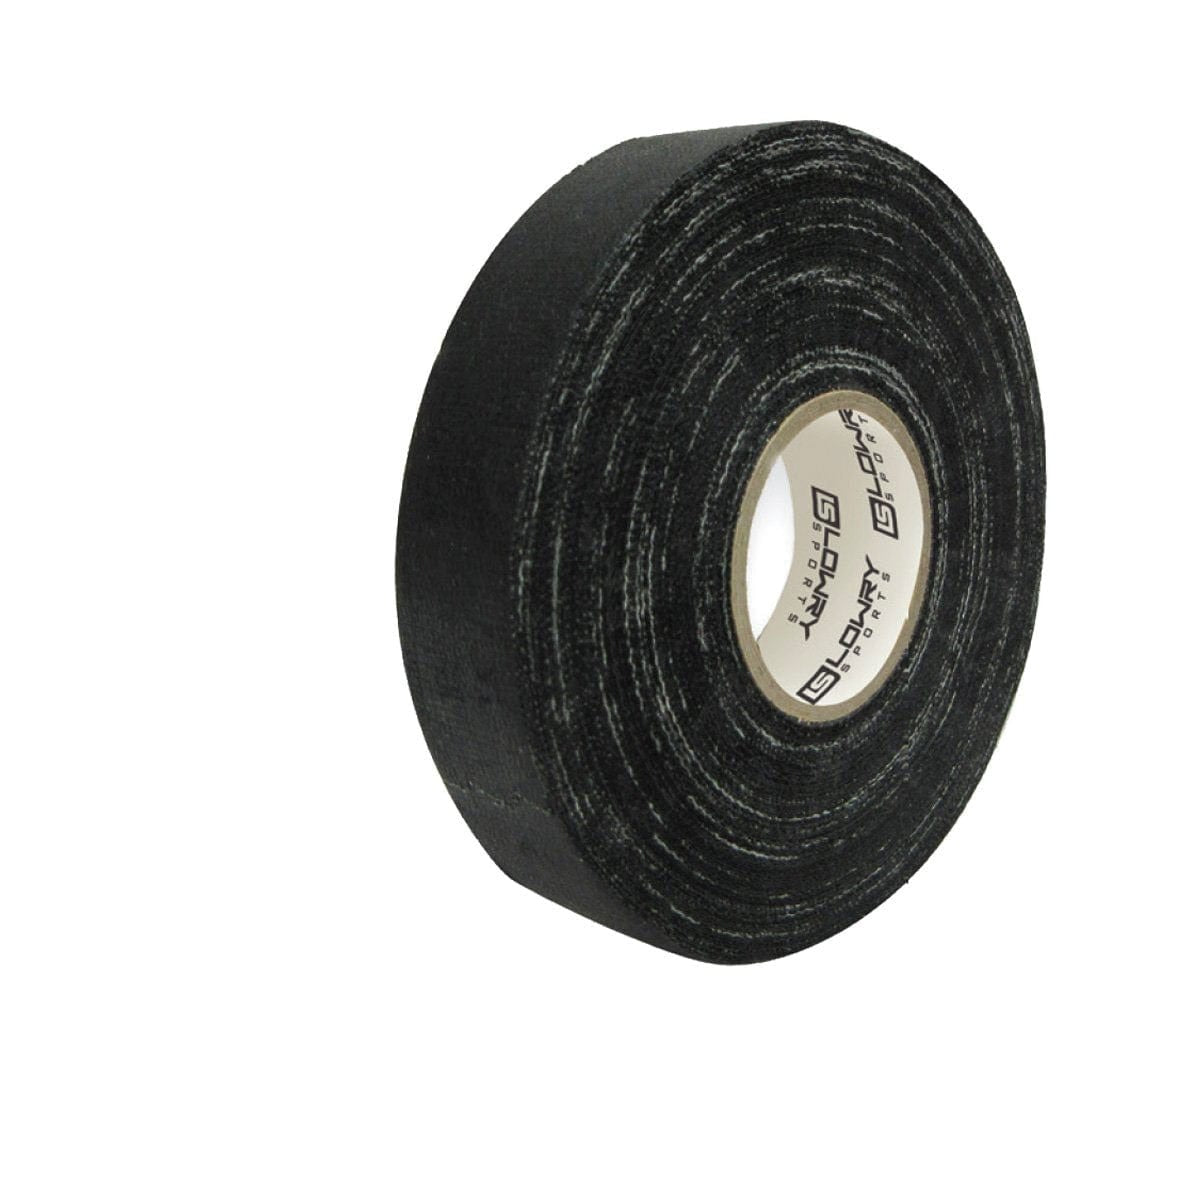 Lowry Sports Pro-Grade Hockey Sock Tape - Small Roll